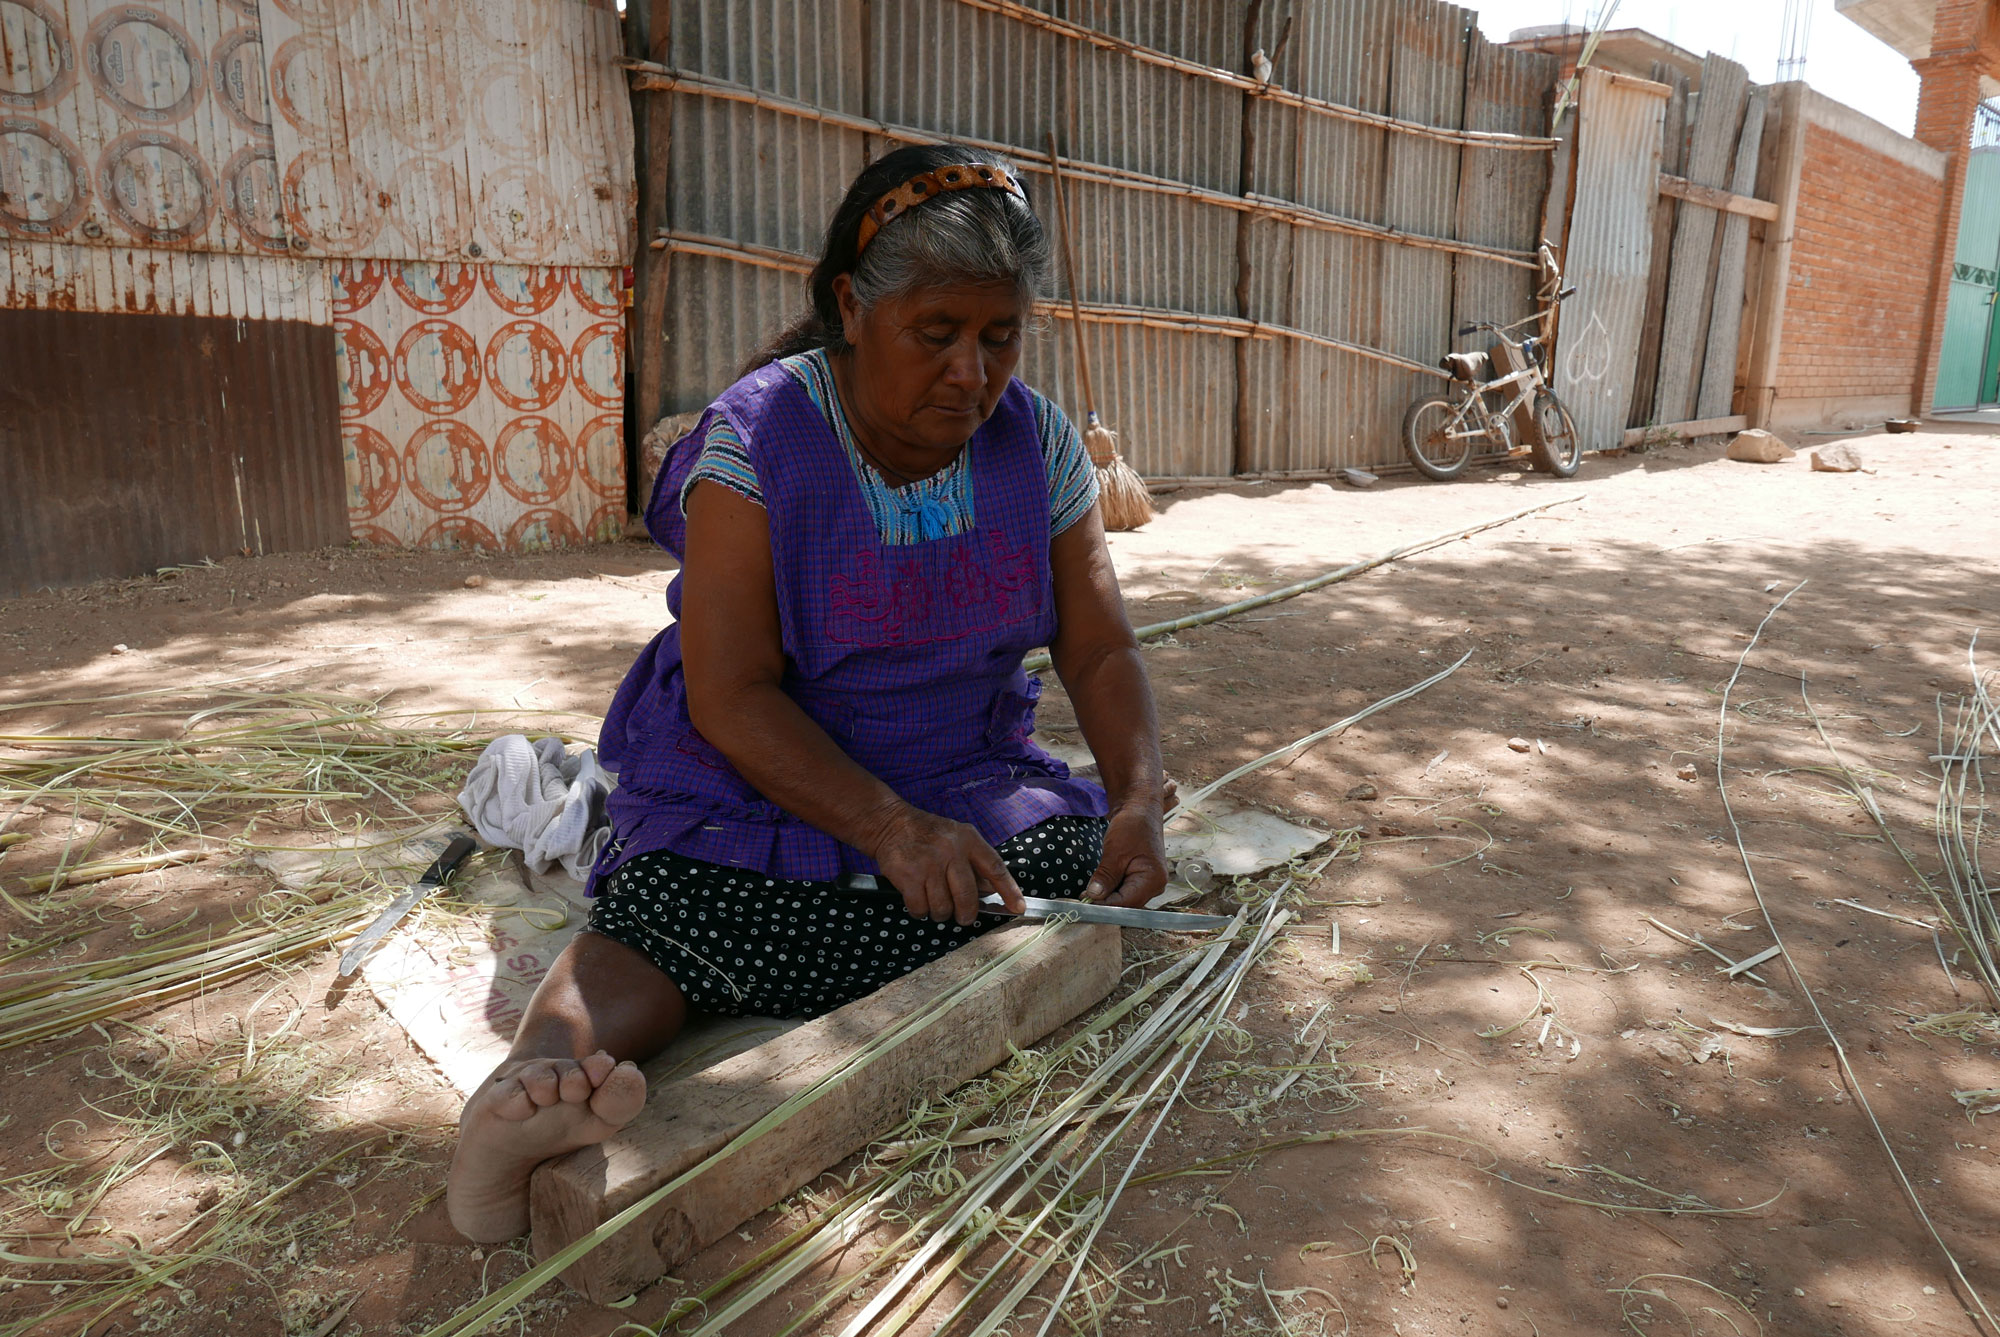 Artisan Cutting Carrizo Reeds Ready for Weaving Baskets in Oaxaca Mexico - www.nidocollective.com/carrizoweaving #carrizo #canastascarrizo #basketweaving